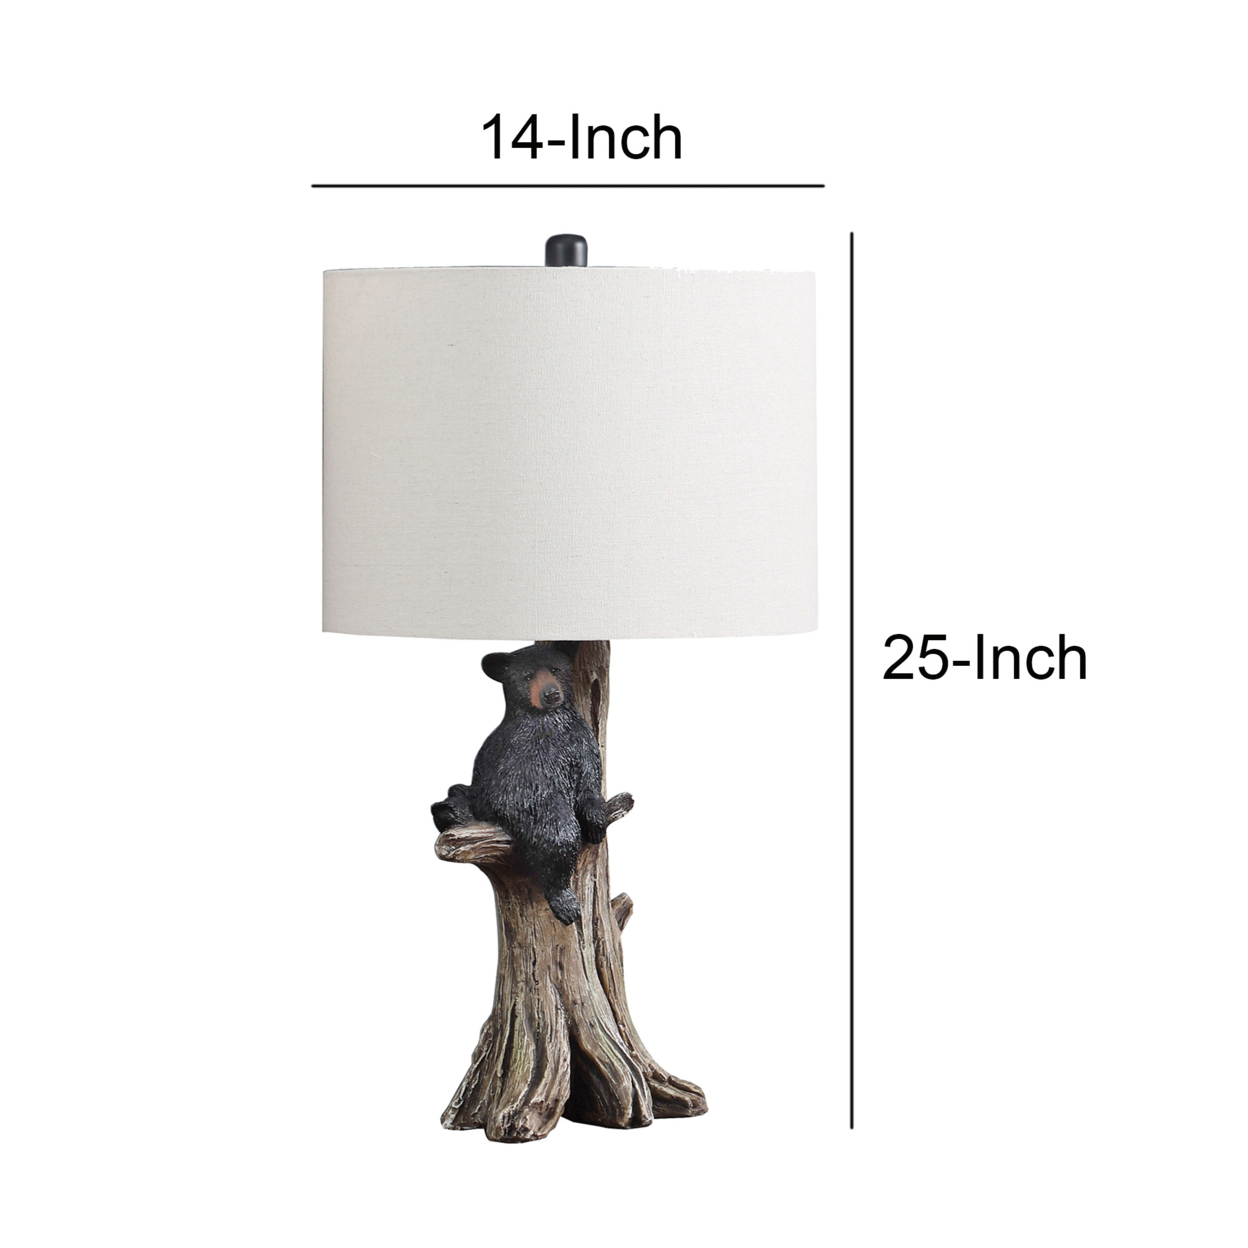 25 Inch Accent Table Lamp, Hardback Fabric Shade, Bear Accent, Black, White- Saltoro Sherpi